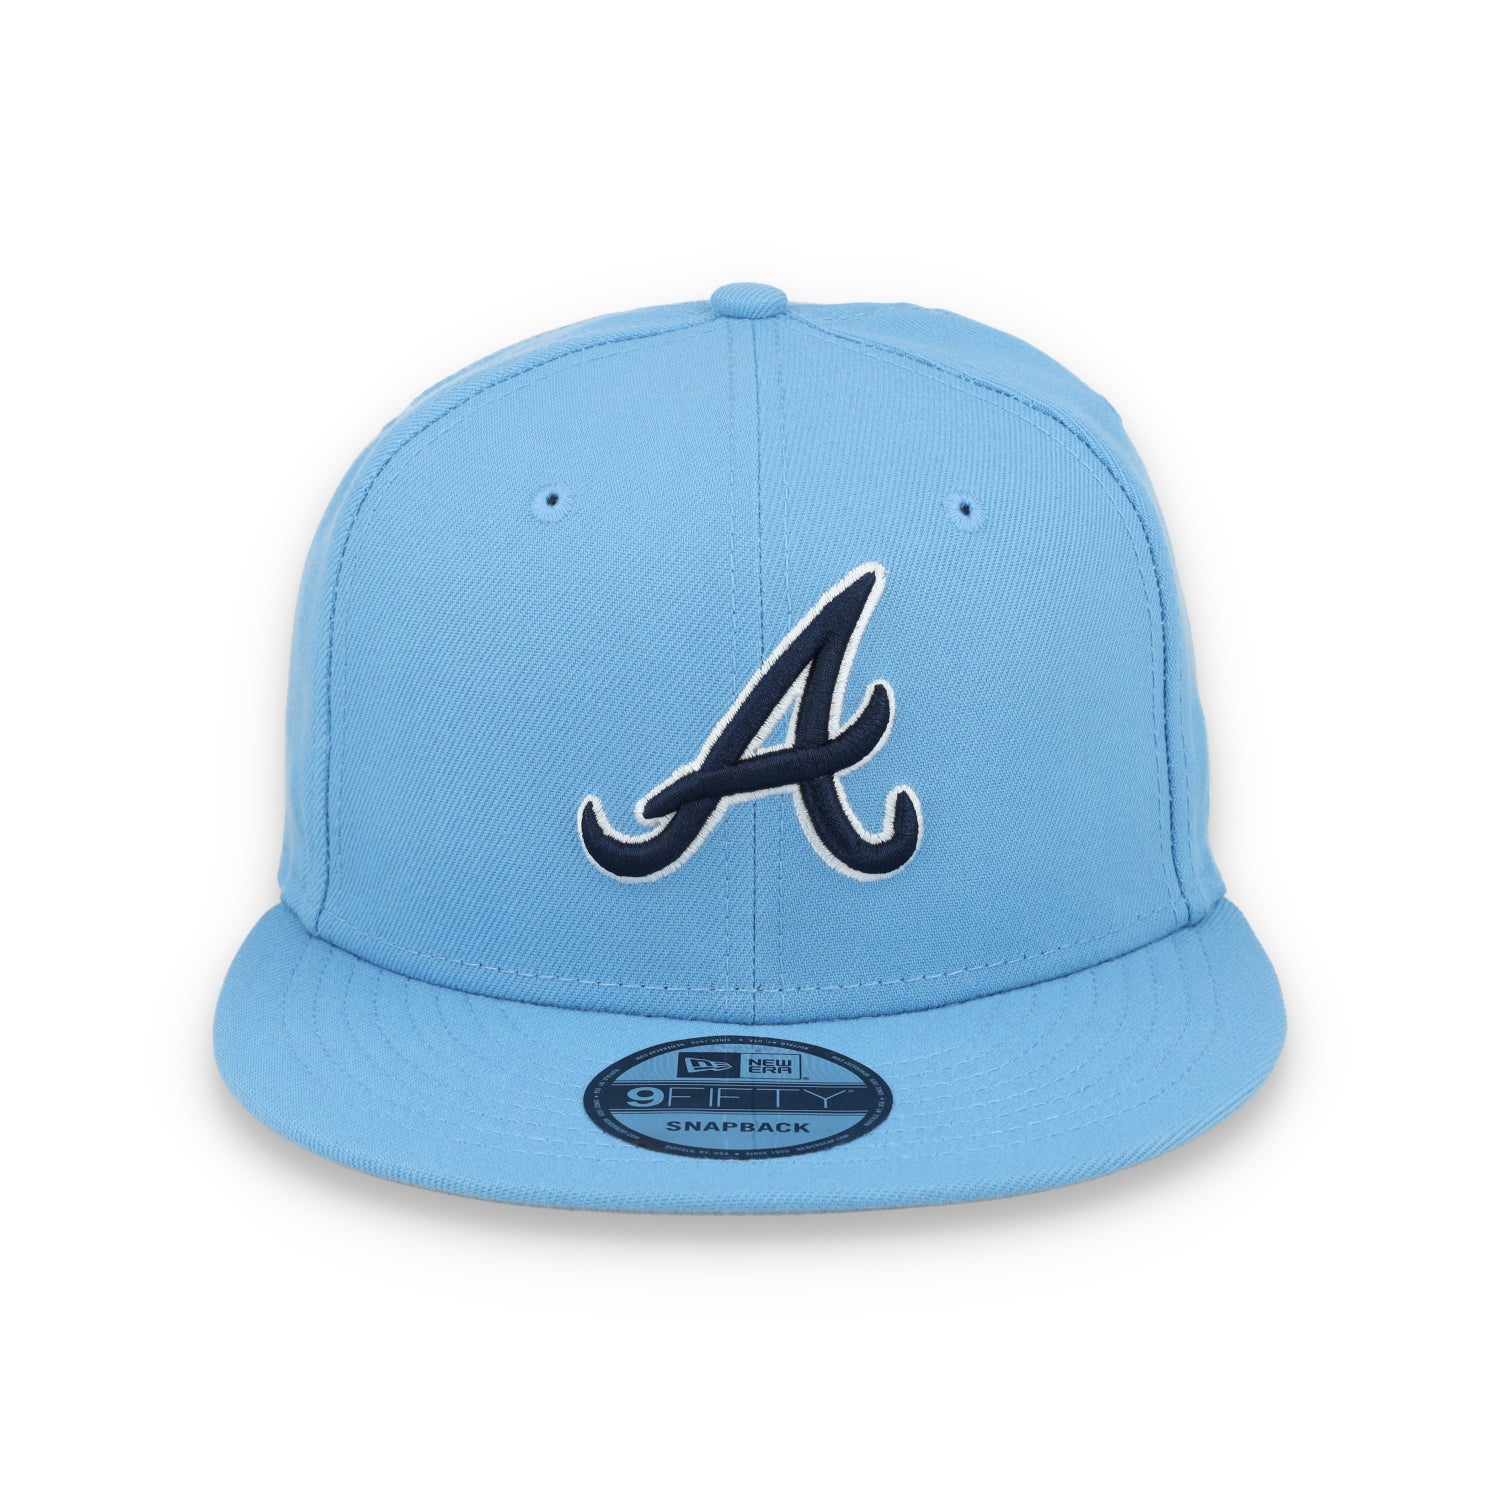 New Era Atlanta Braves SNAPBACK 9FIFTY-Sky Blue